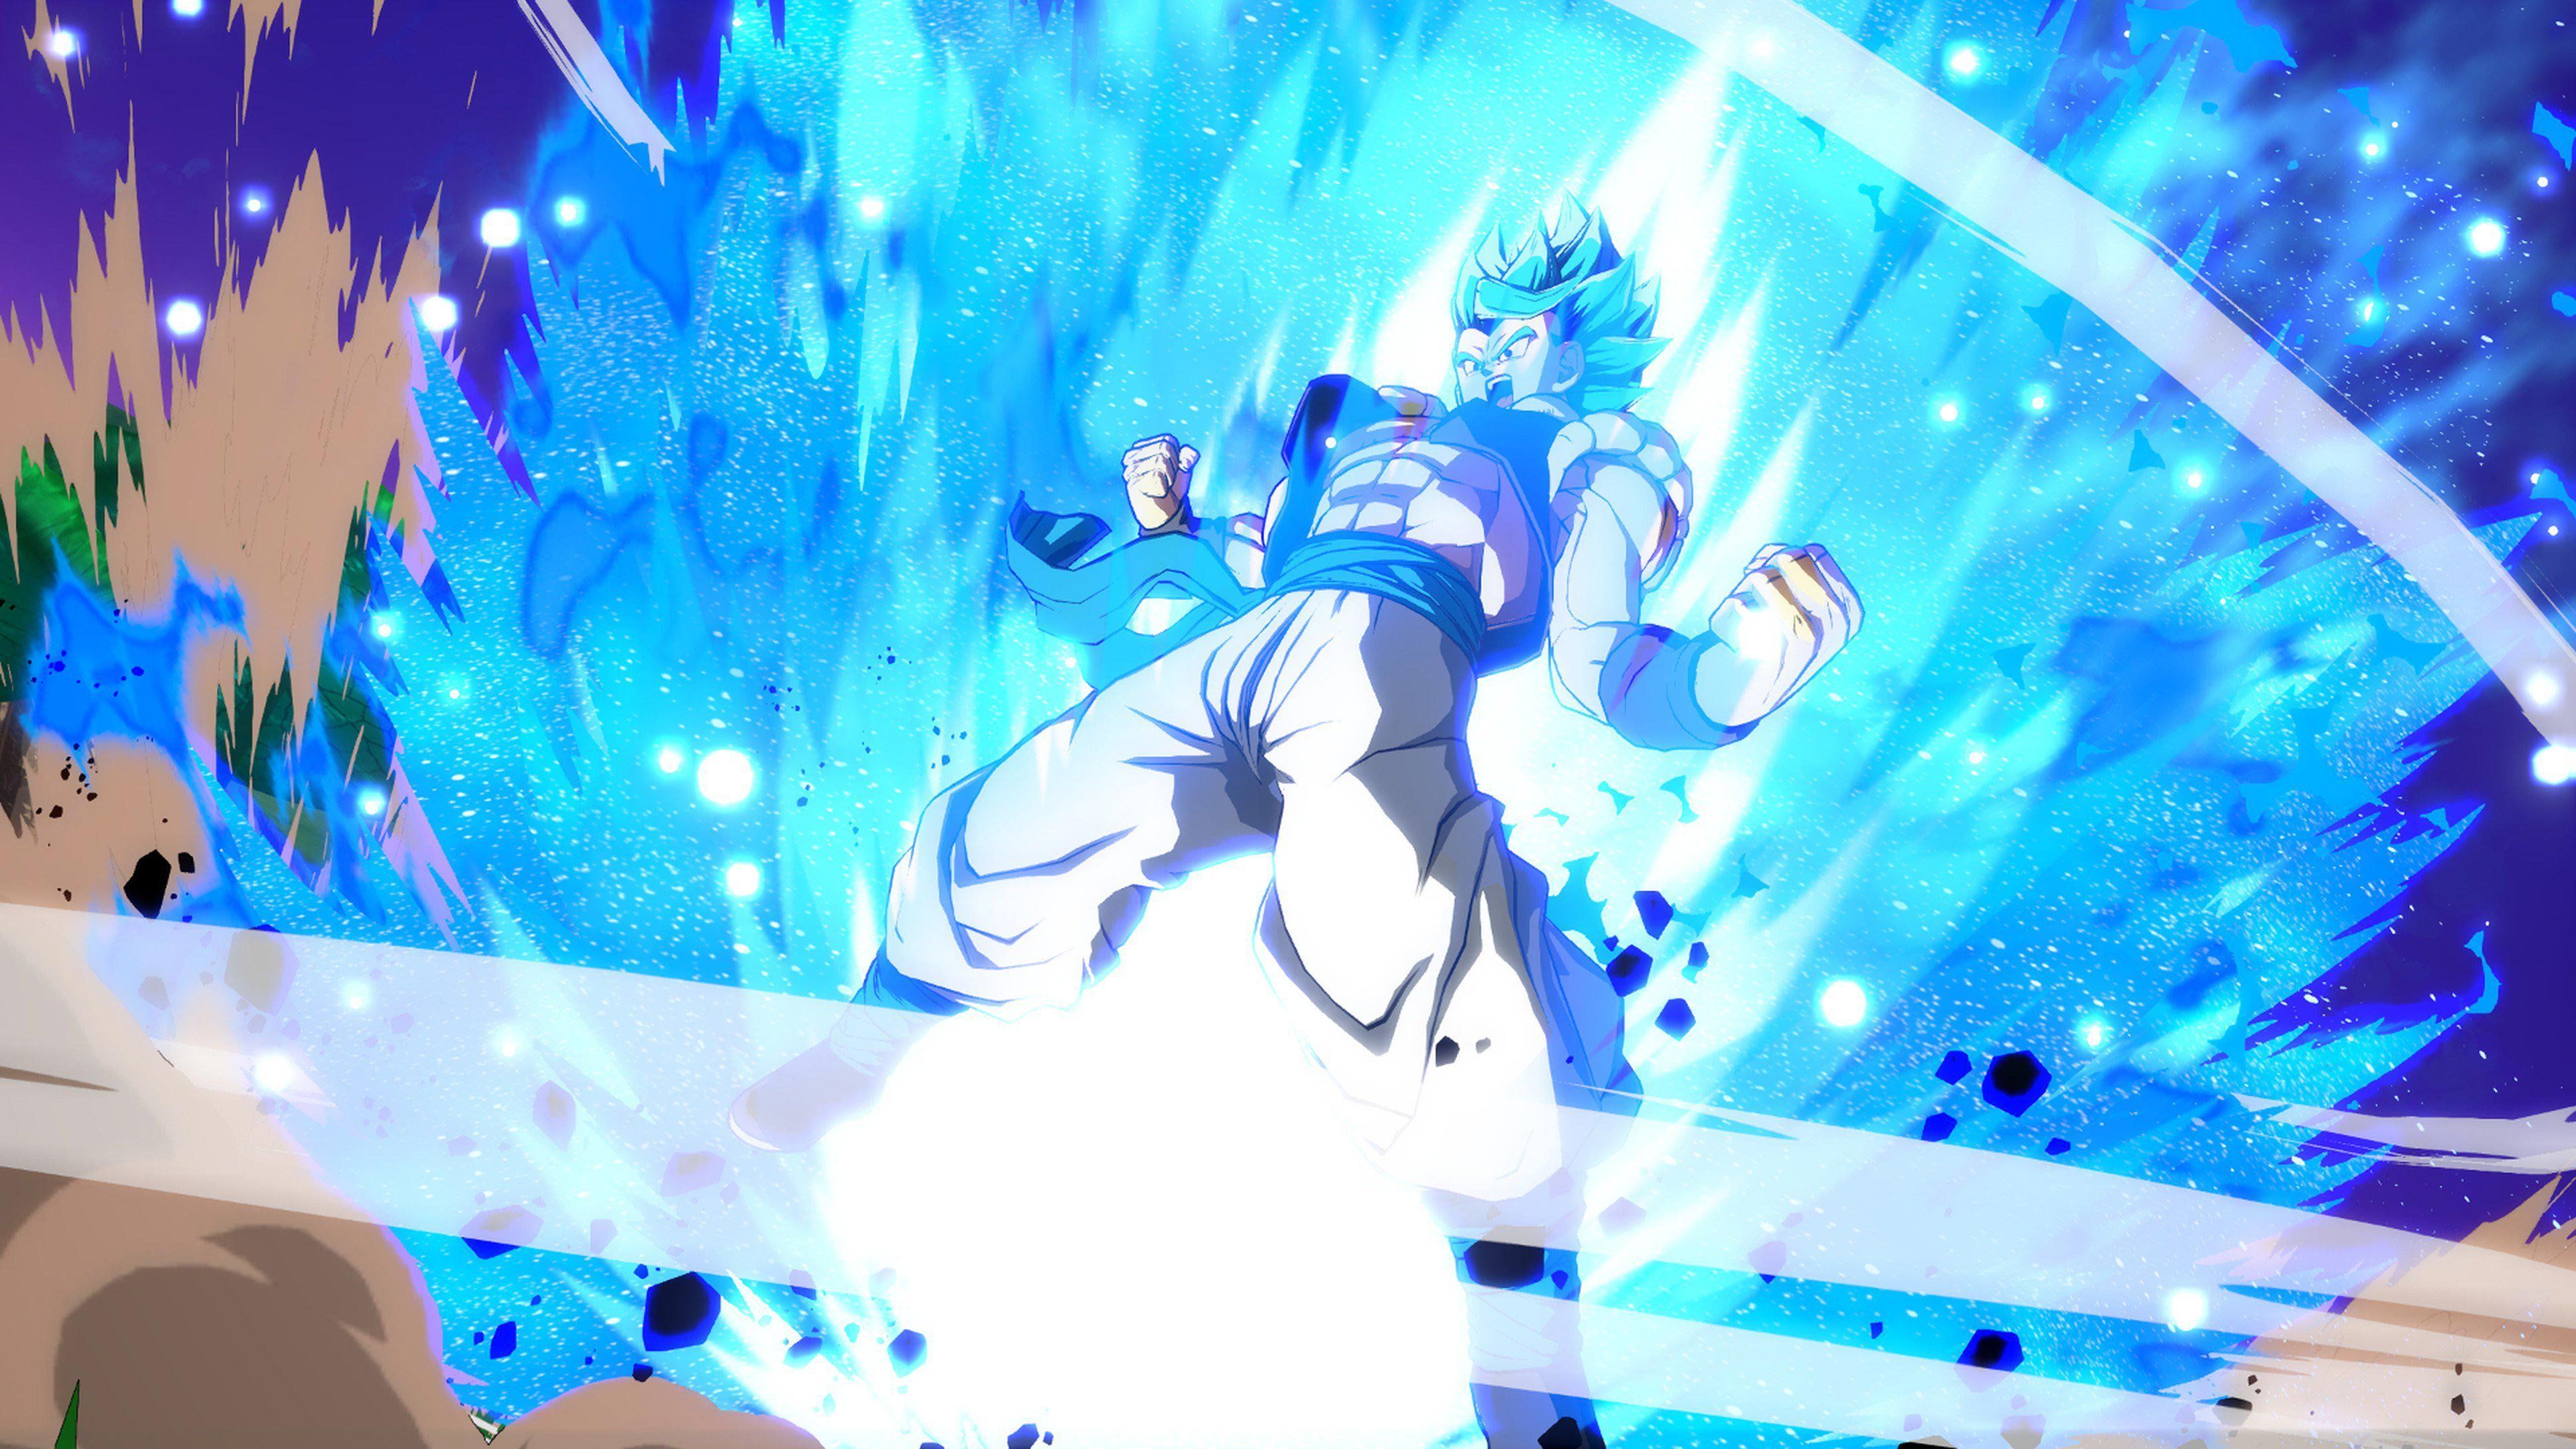 Dragon Ball FighterZ: Gogeta Super Saiyan Blue has a release date